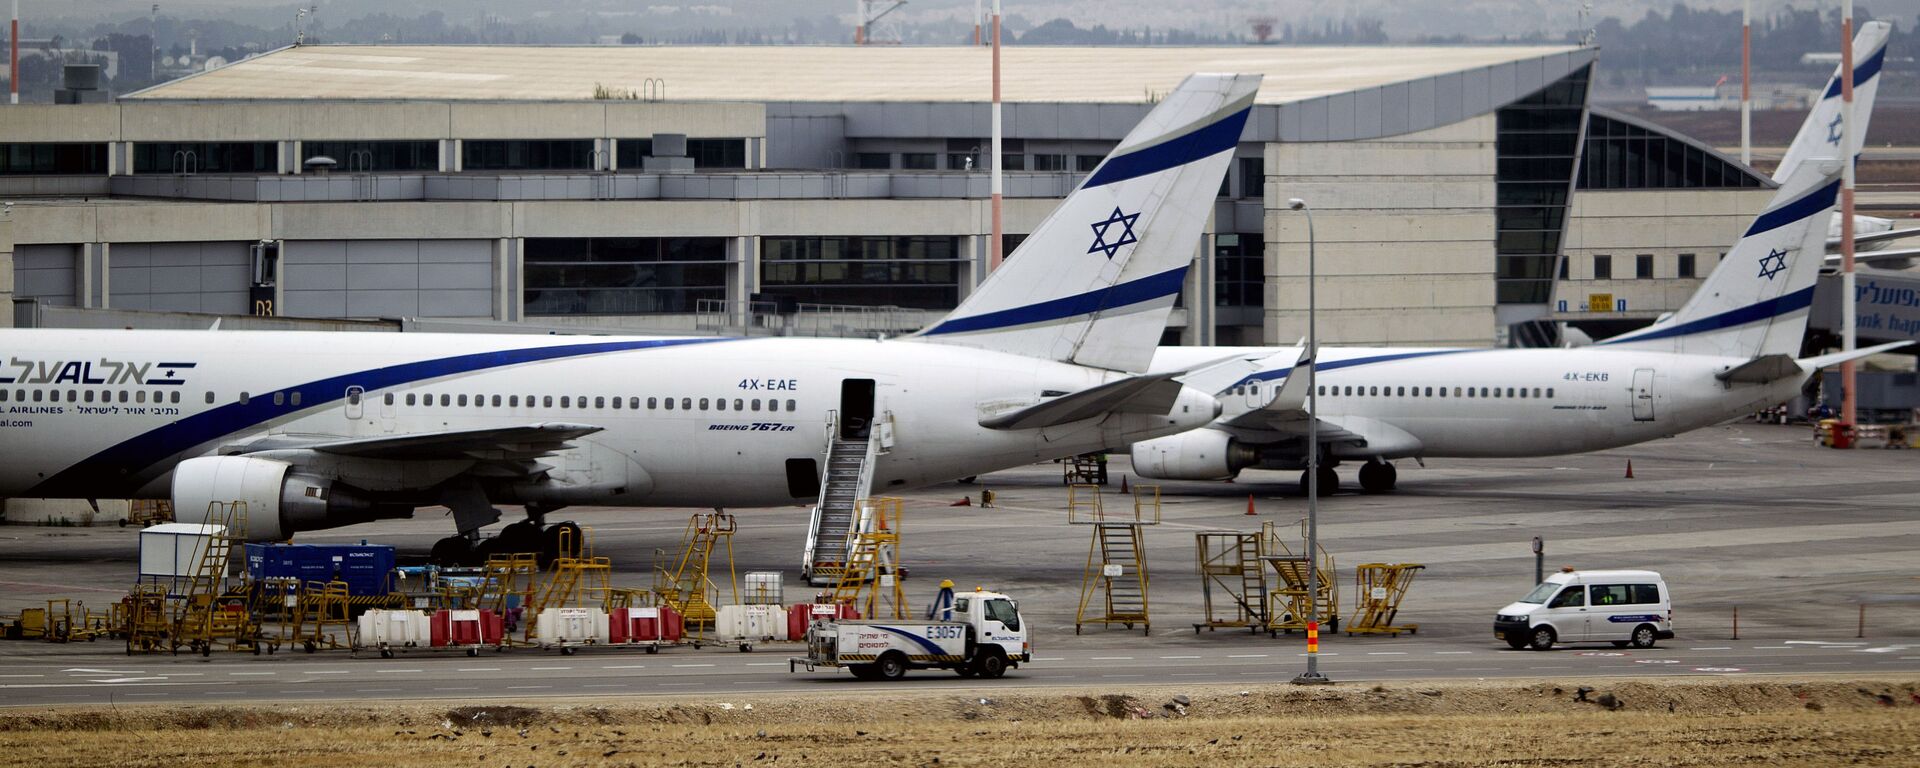 مطار بن غوريون الدولي في تل أبيب، إسرائيل 21 أبريل/ نيسان 2013 - سبوتنيك عربي, 1920, 25.05.2021